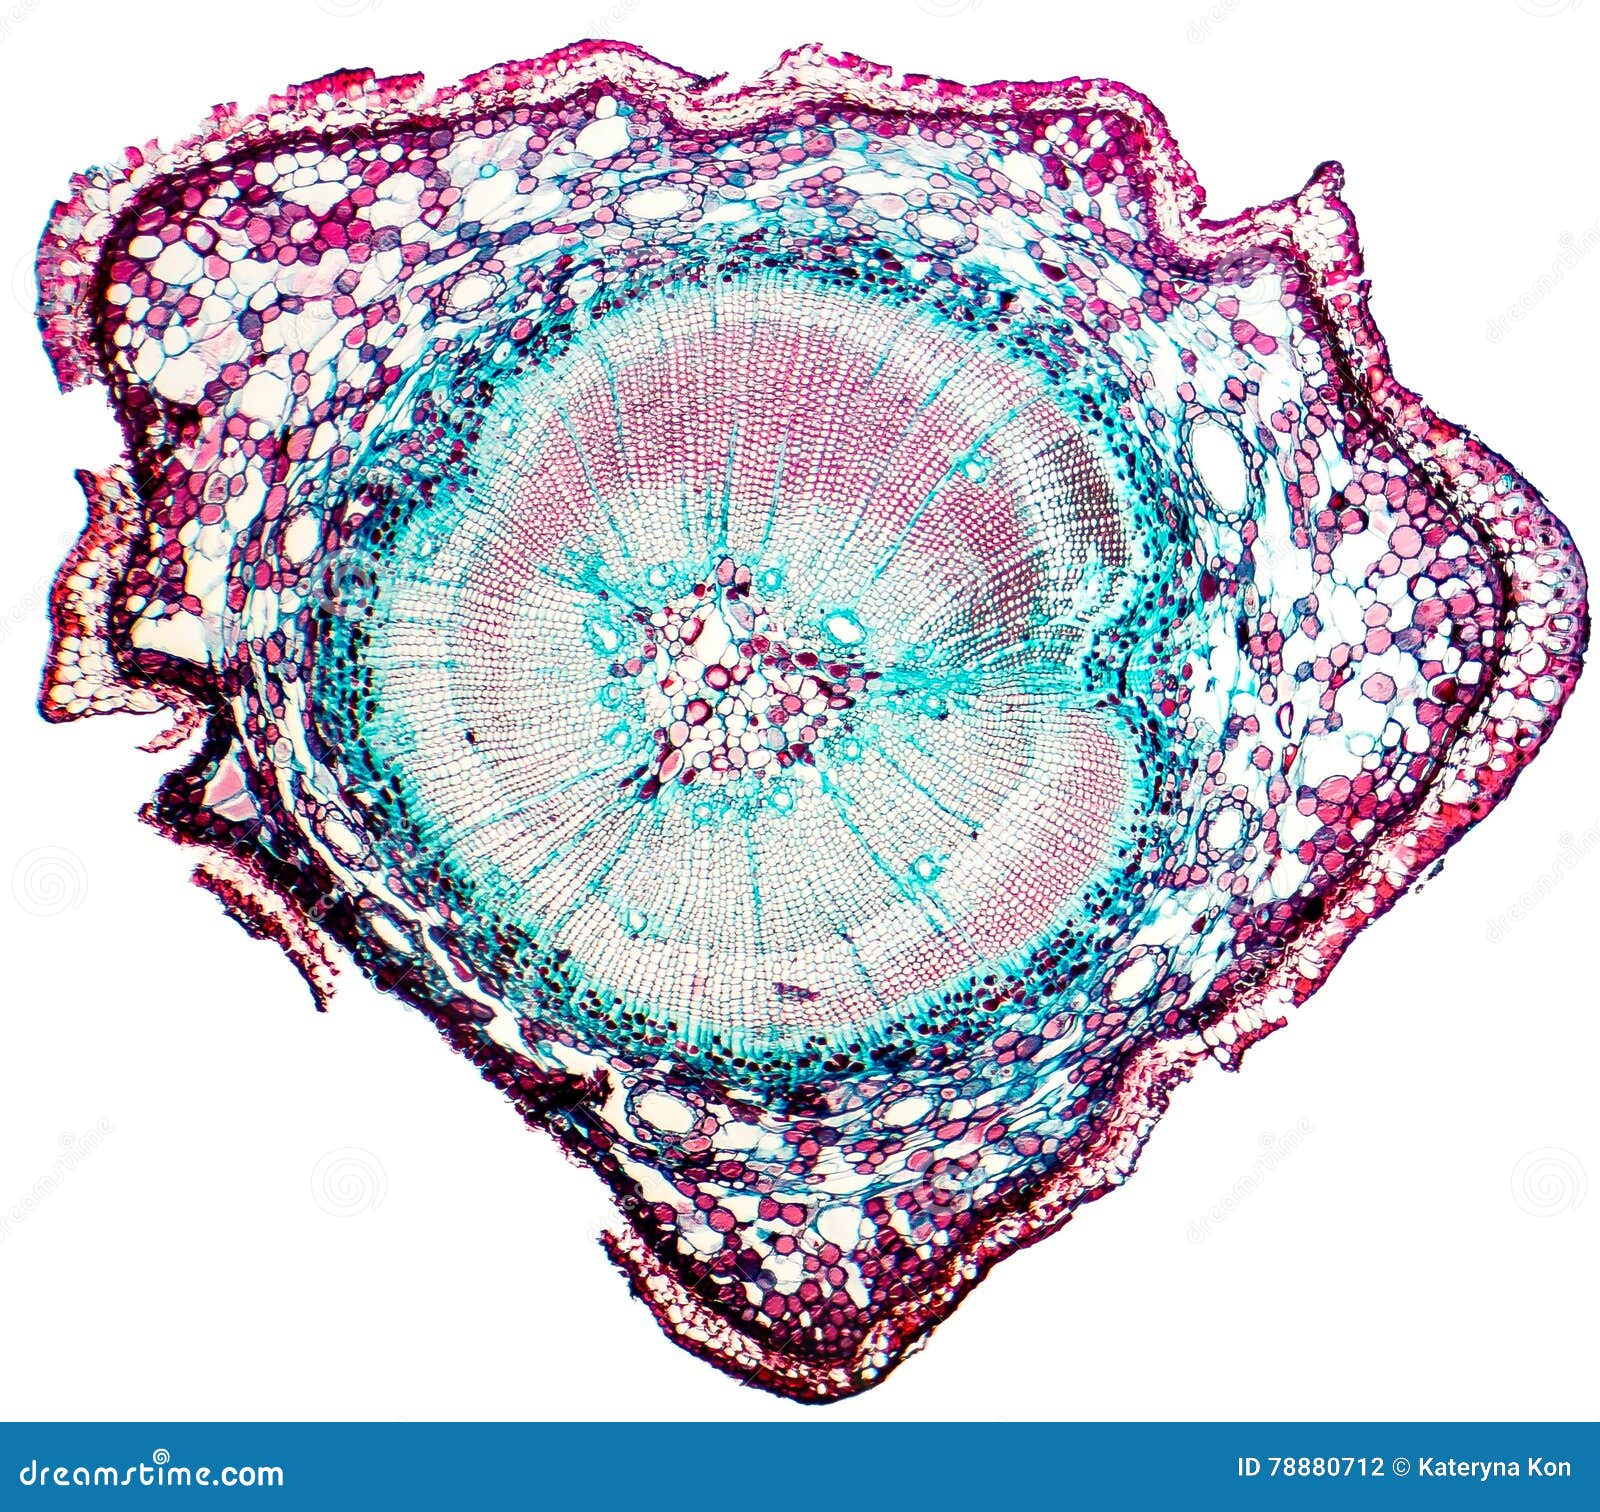 15 m Microscope Slide sec White Pine Wood 